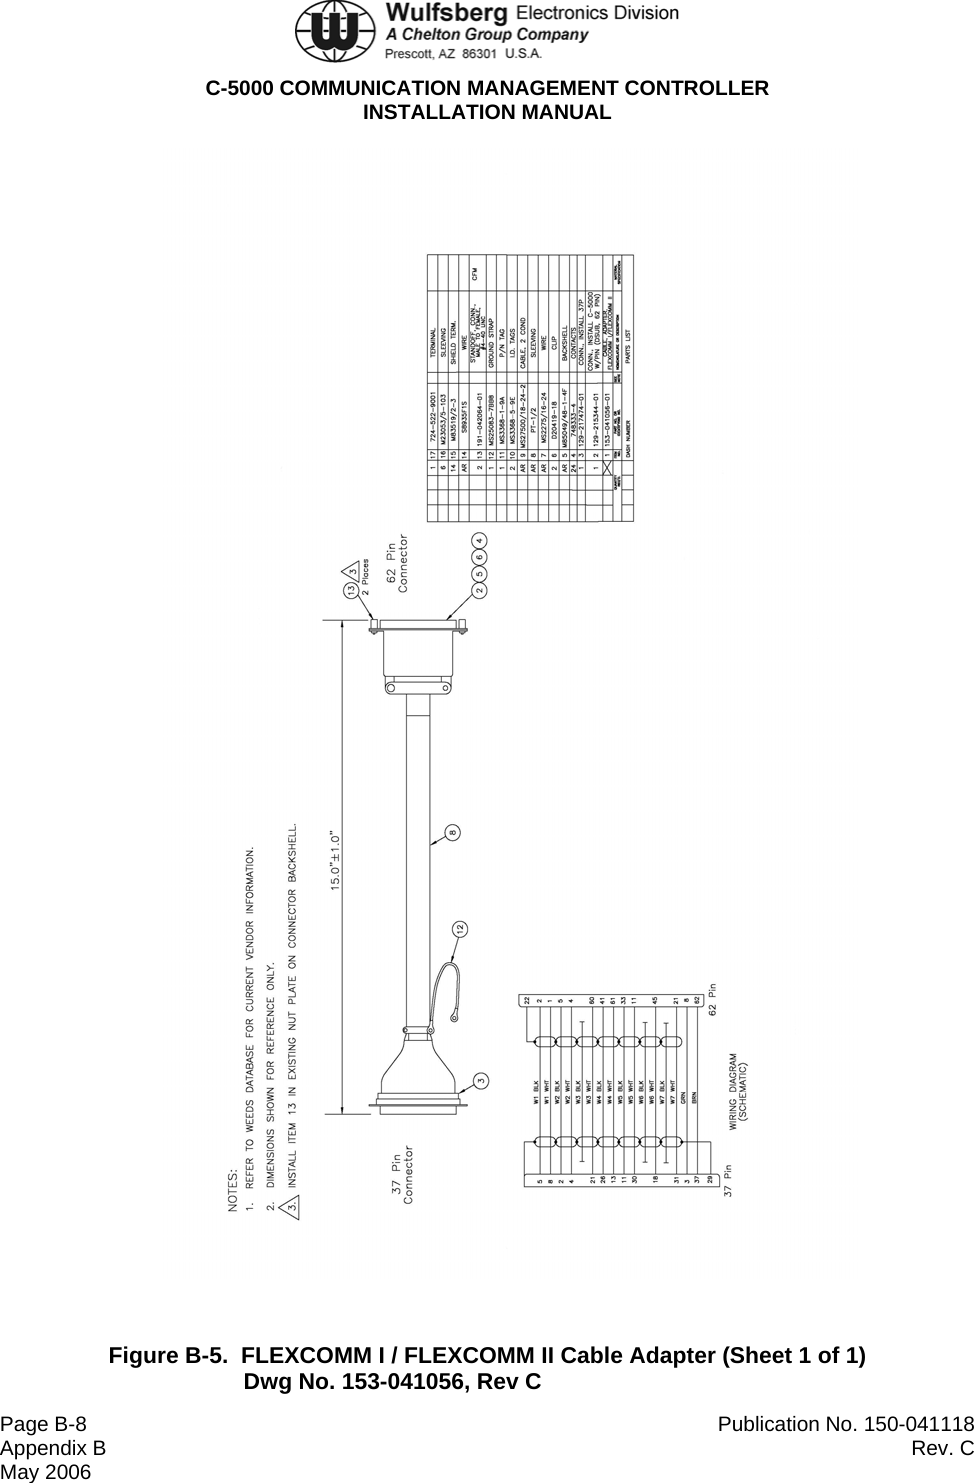  C-5000 COMMUNICATION MANAGEMENT CONTROLLER INSTALLATION MANUAL  Page B-8   Publication No. 150-041118 Appendix B  Rev. C  May 2006   Figure B-5.  FLEXCOMM I / FLEXCOMM II Cable Adapter (Sheet 1 of 1) Dwg No. 153-041056, Rev C 